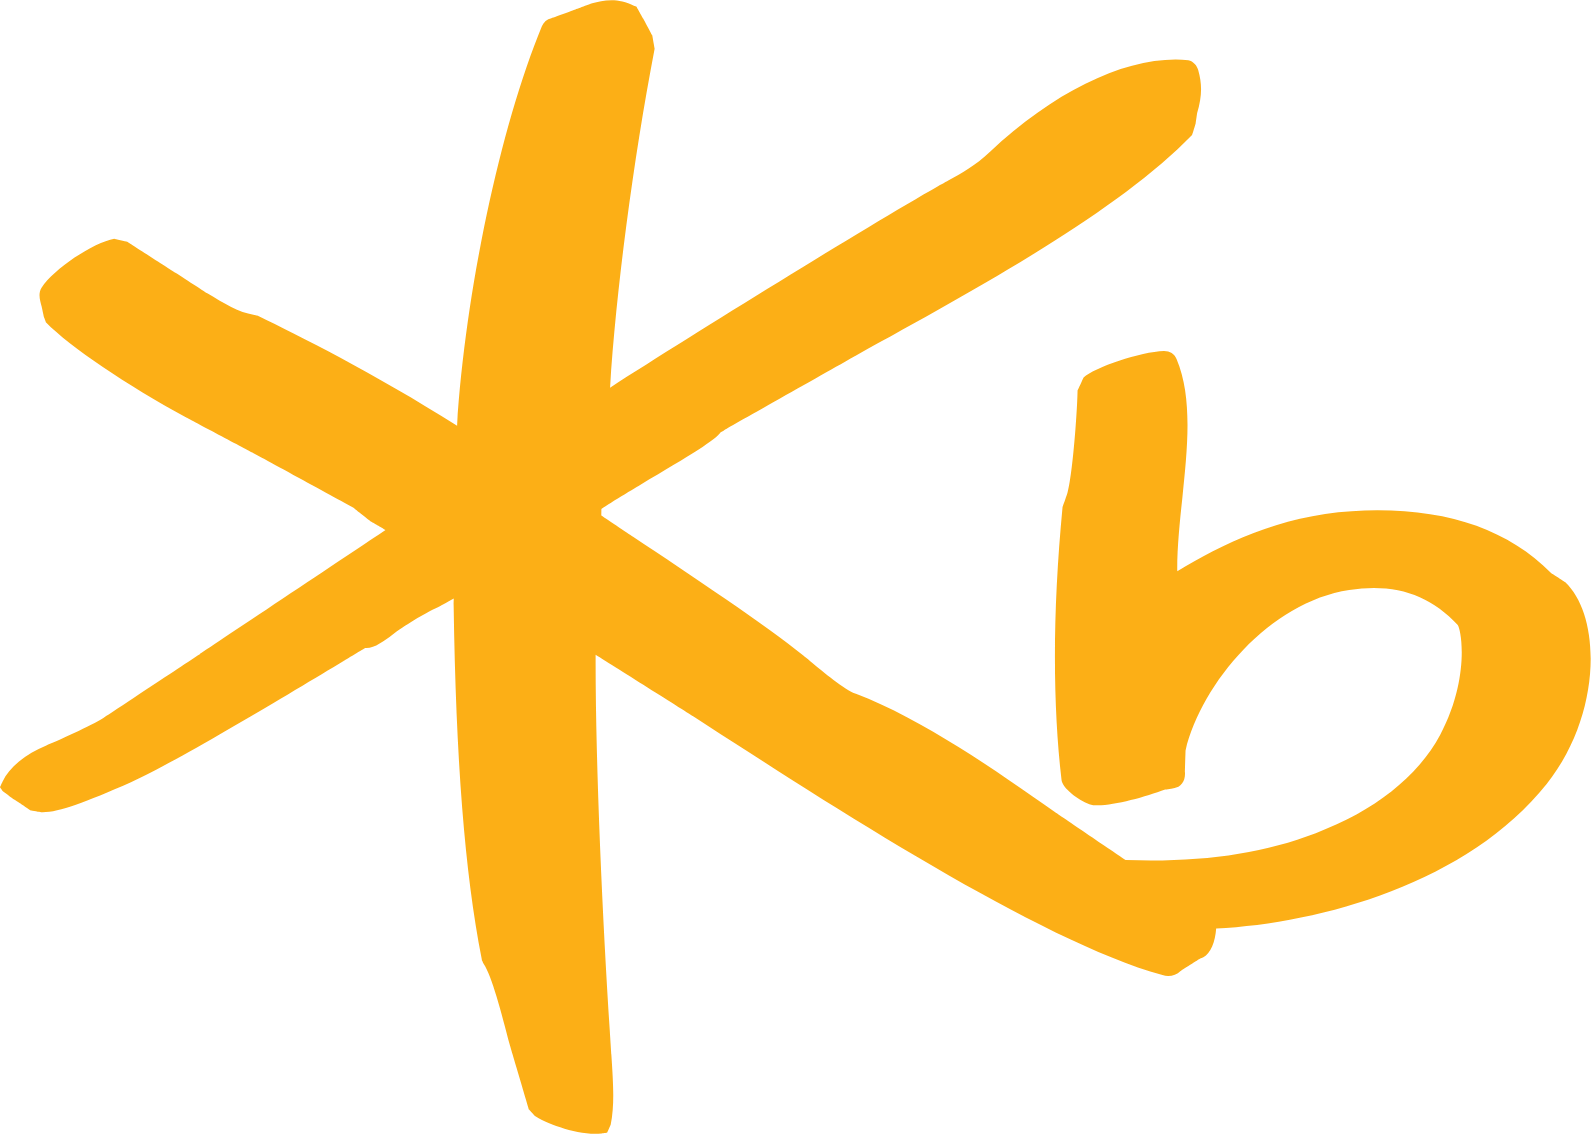 KB Financial Group logo (transparent PNG)